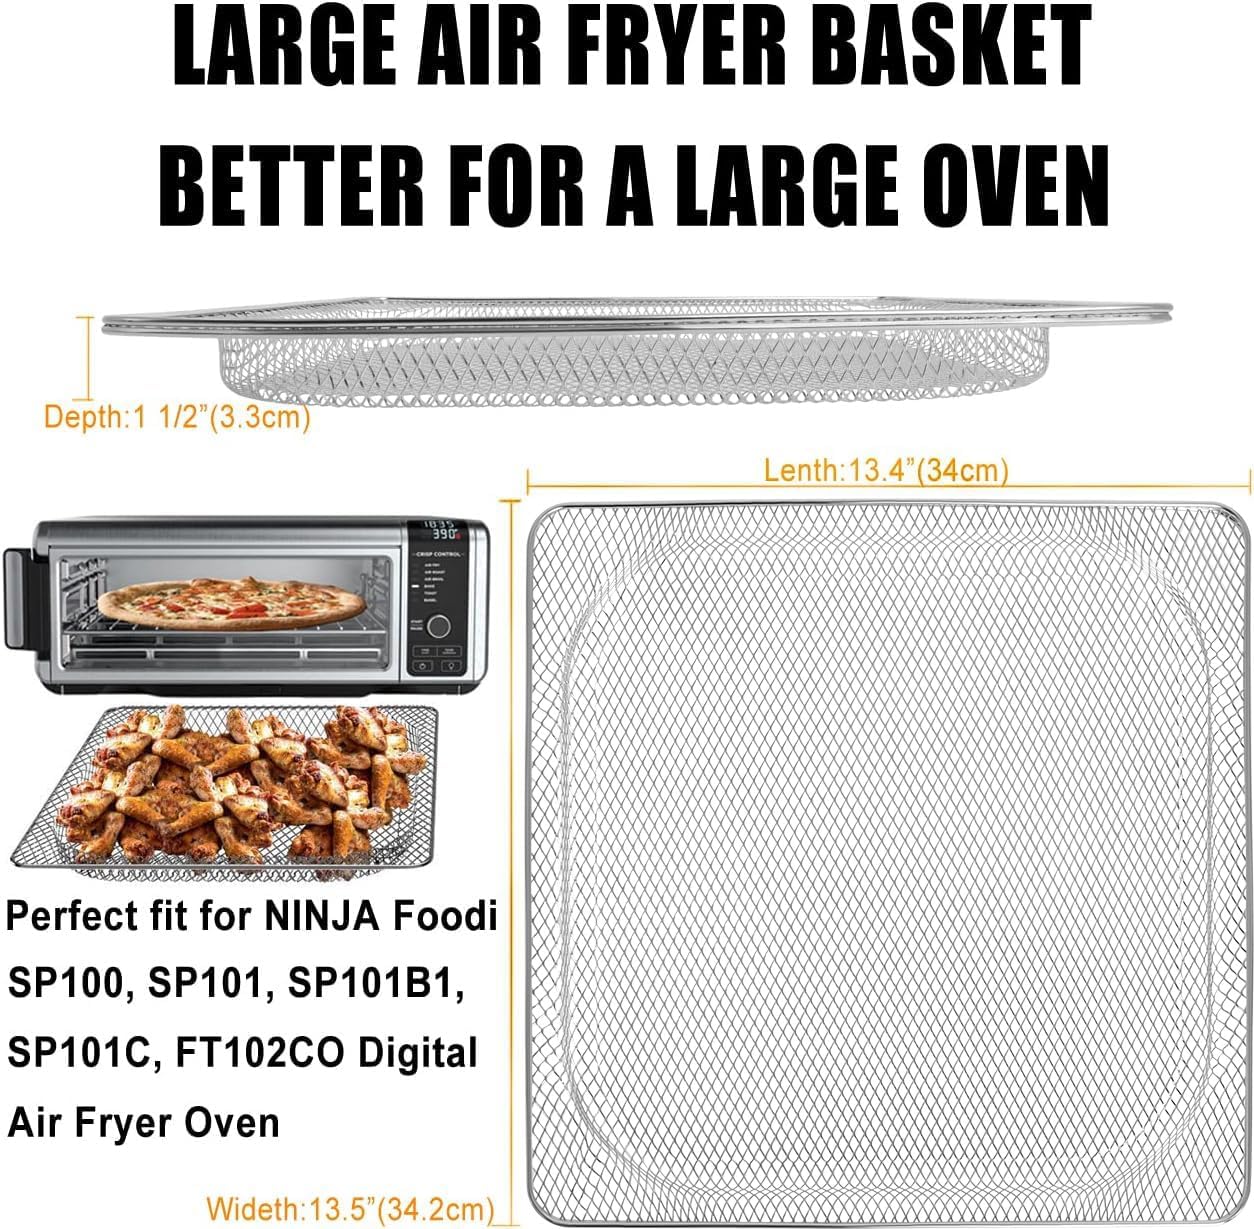 Replacement Air Fryer Basket for Ninja Foodi SP101 Air Fry Oven